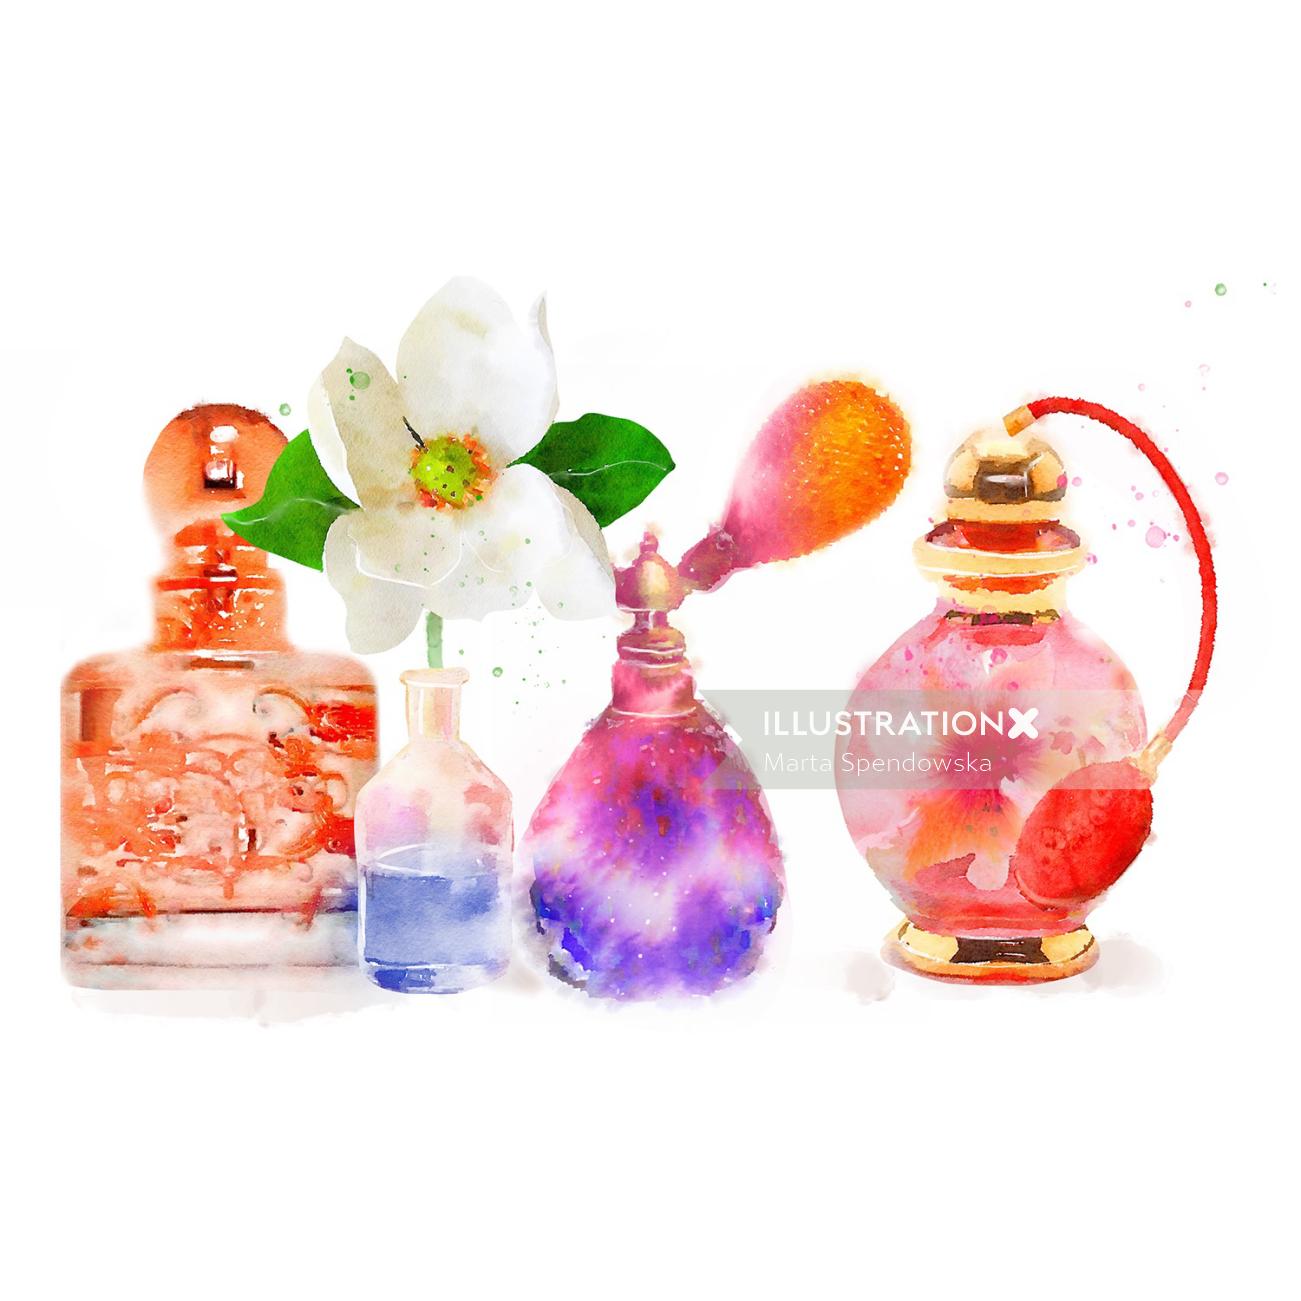 Perfume bottles illustration